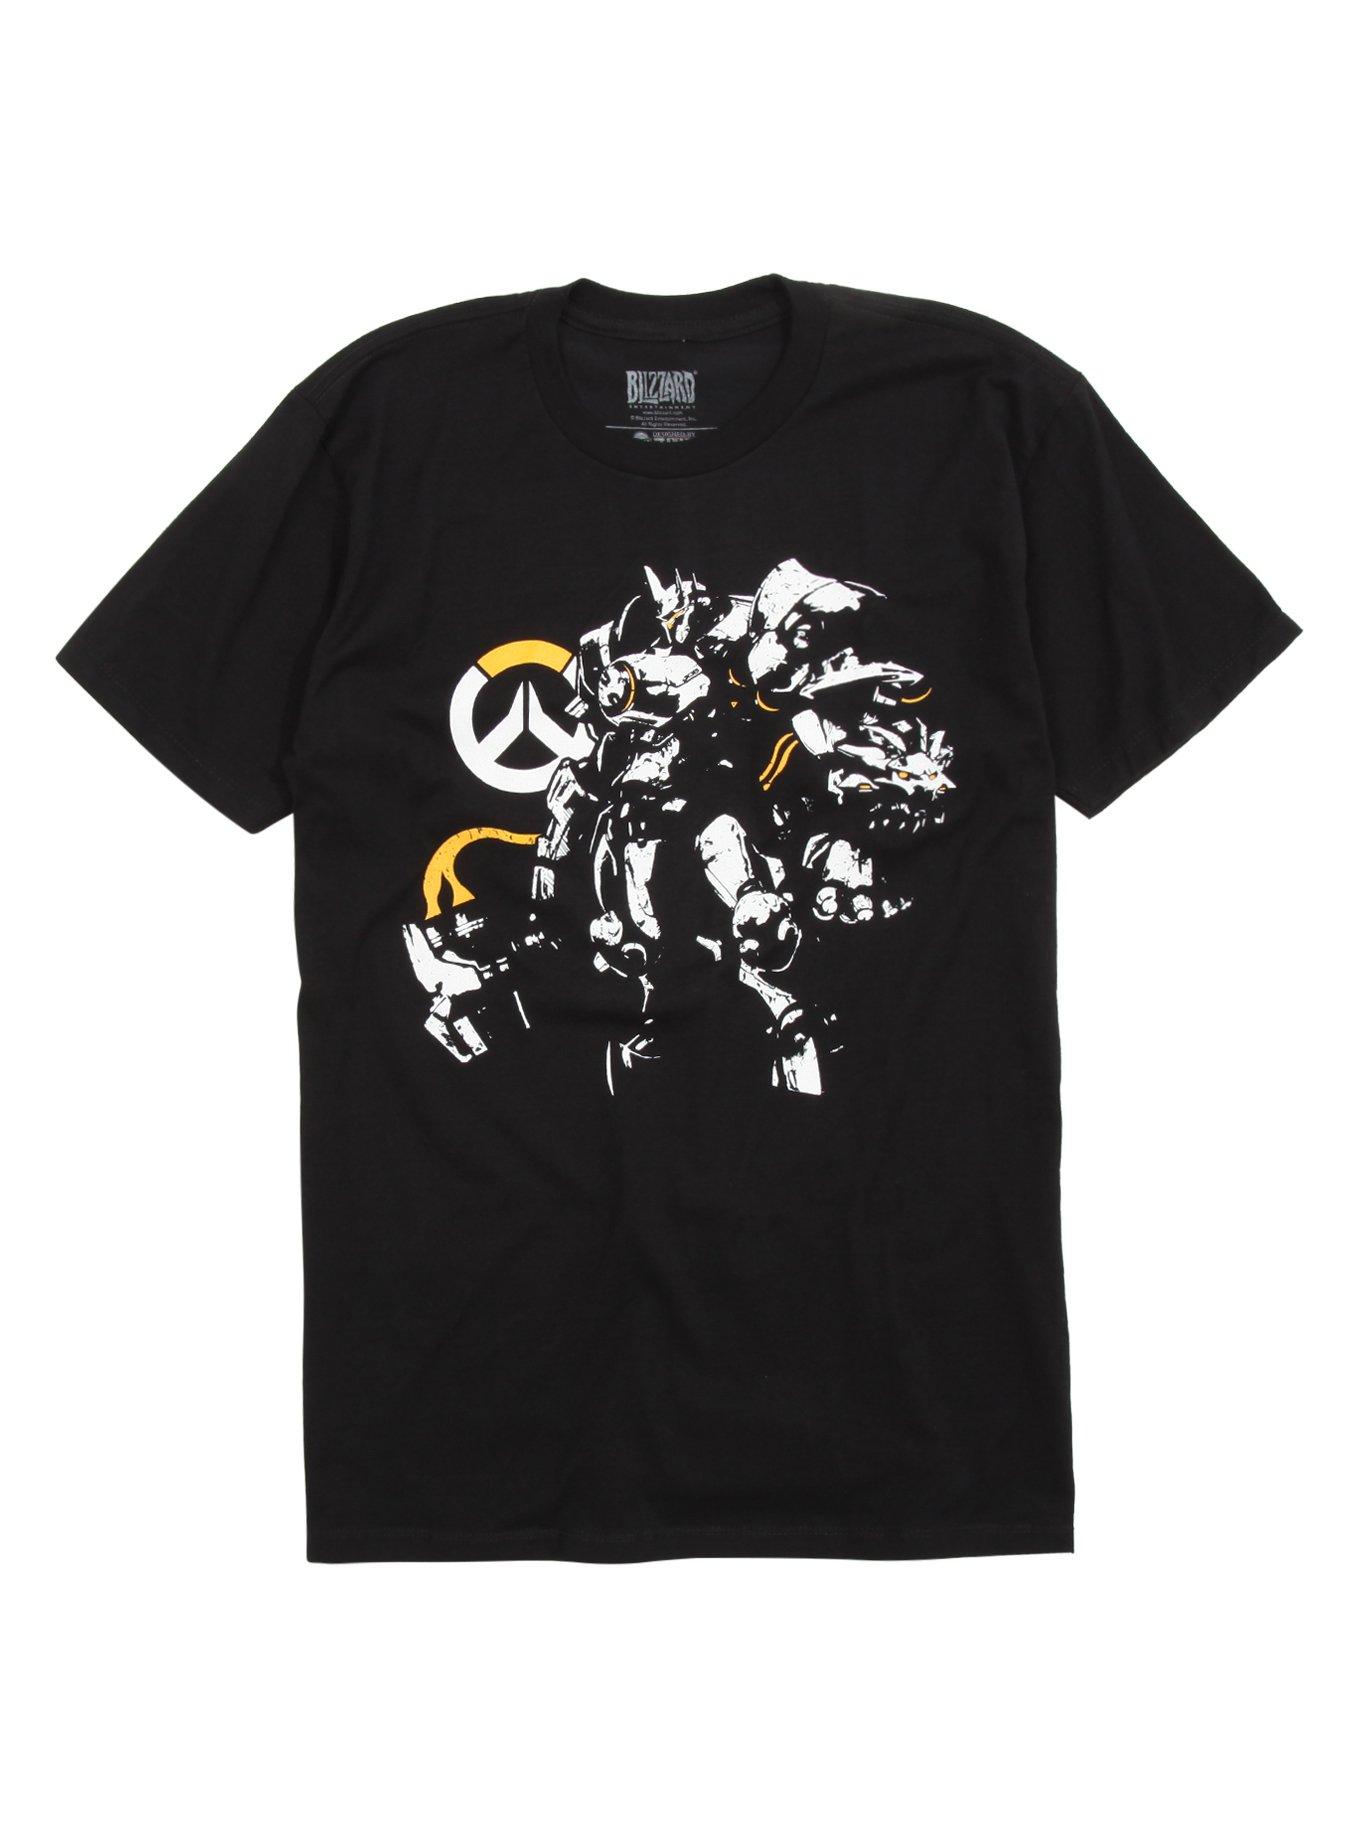 Overwatch Reinhardt T-Shirt, BLACK, hi-res